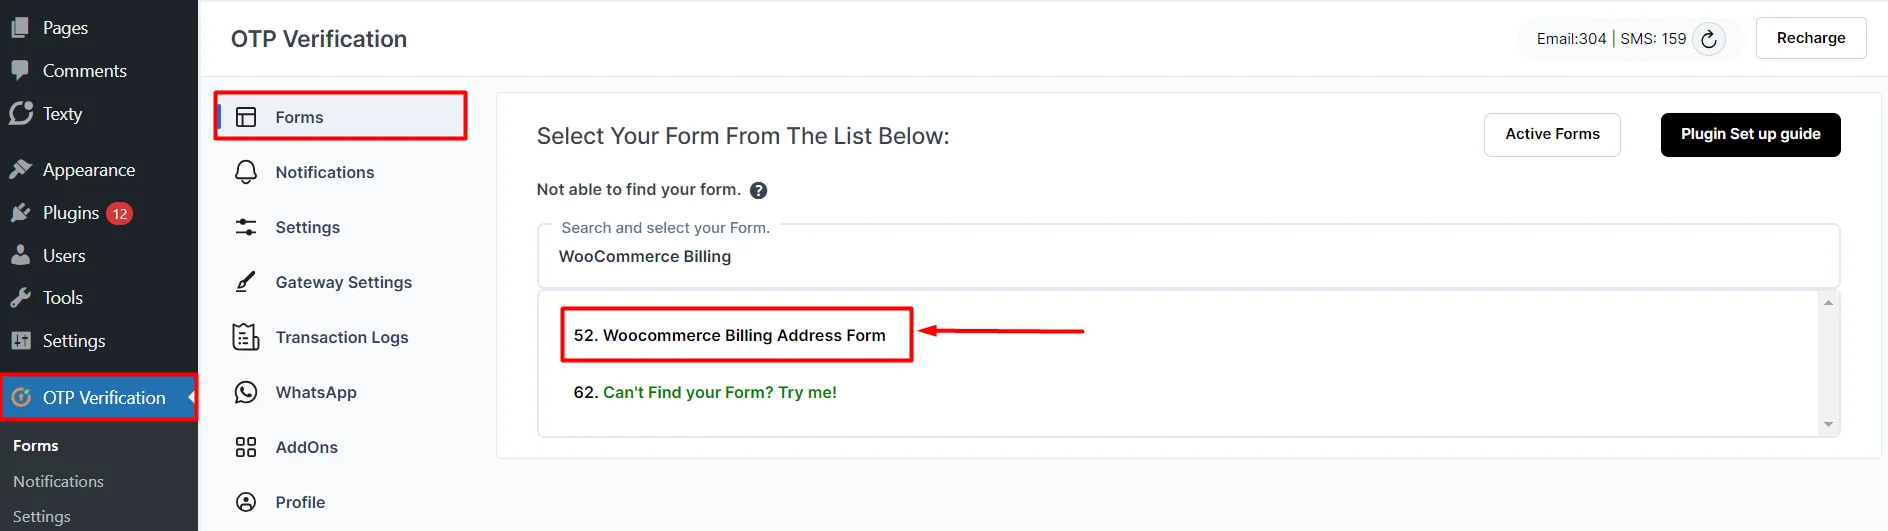 OTP Verification WooCommerce Billing Address Form Section